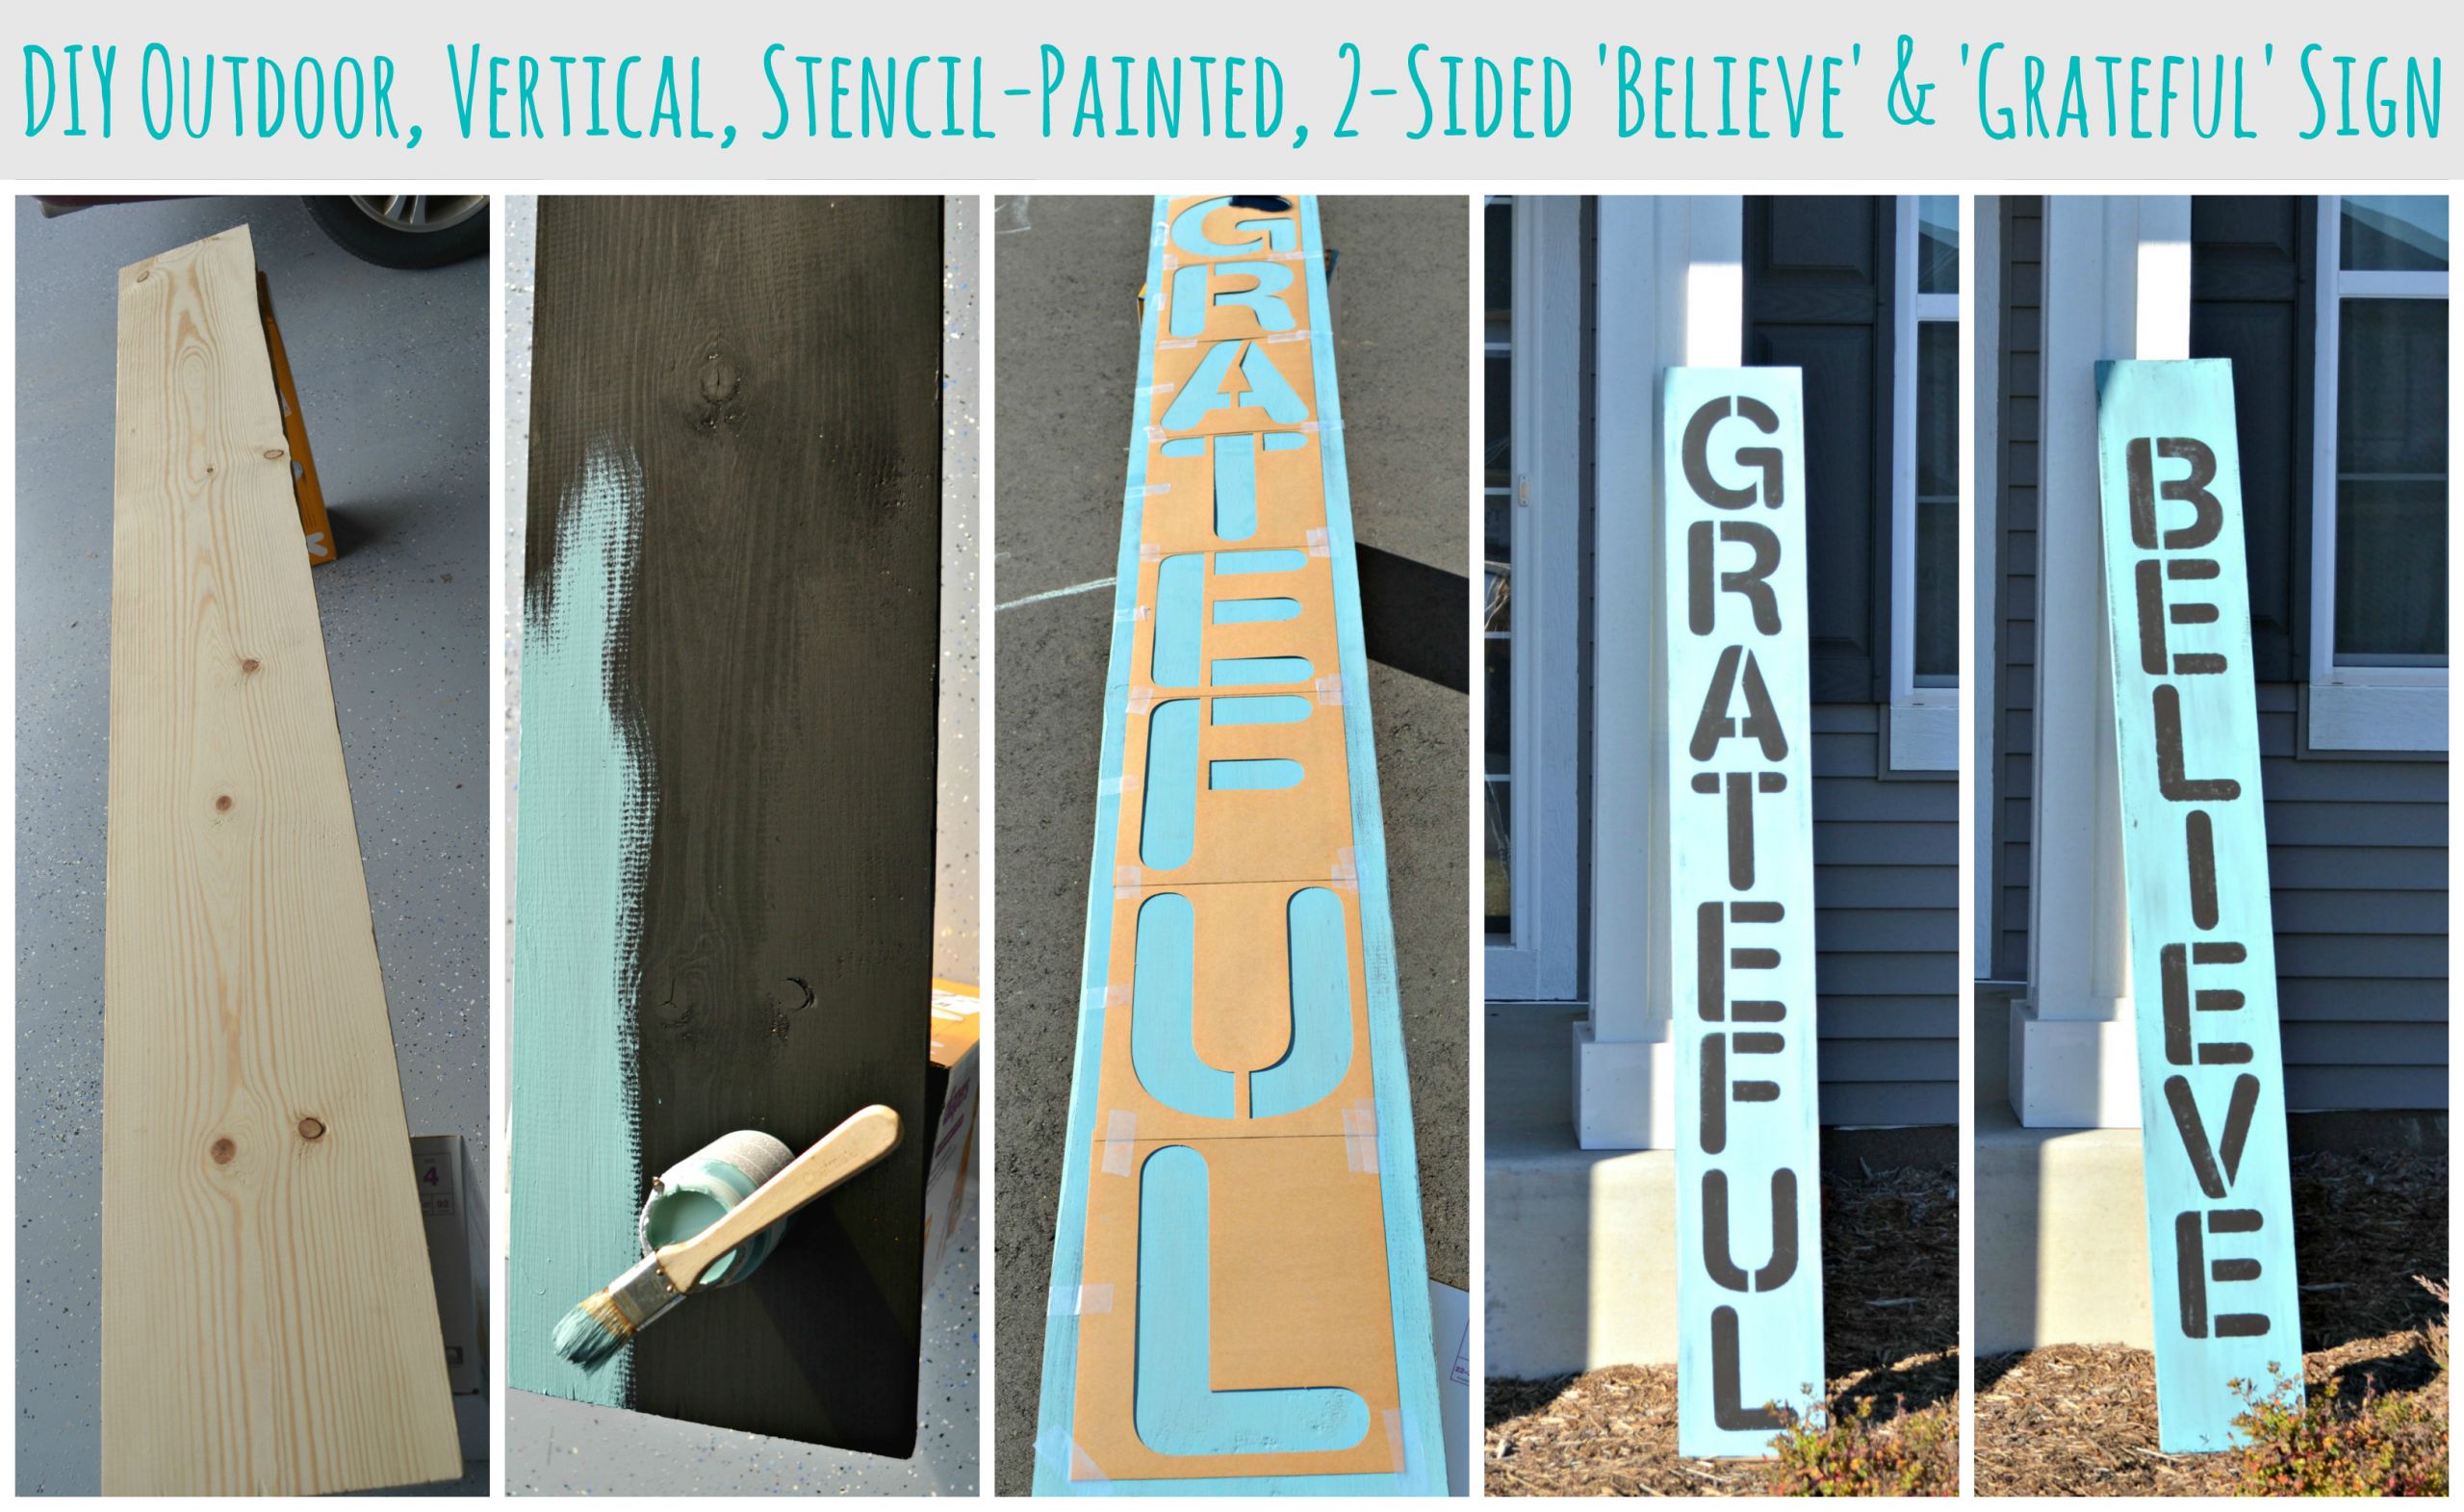 DIY Outdoor Sign
 DIY Outdoor Vertical Stencil Painted BELIEVE and GRATEFUL